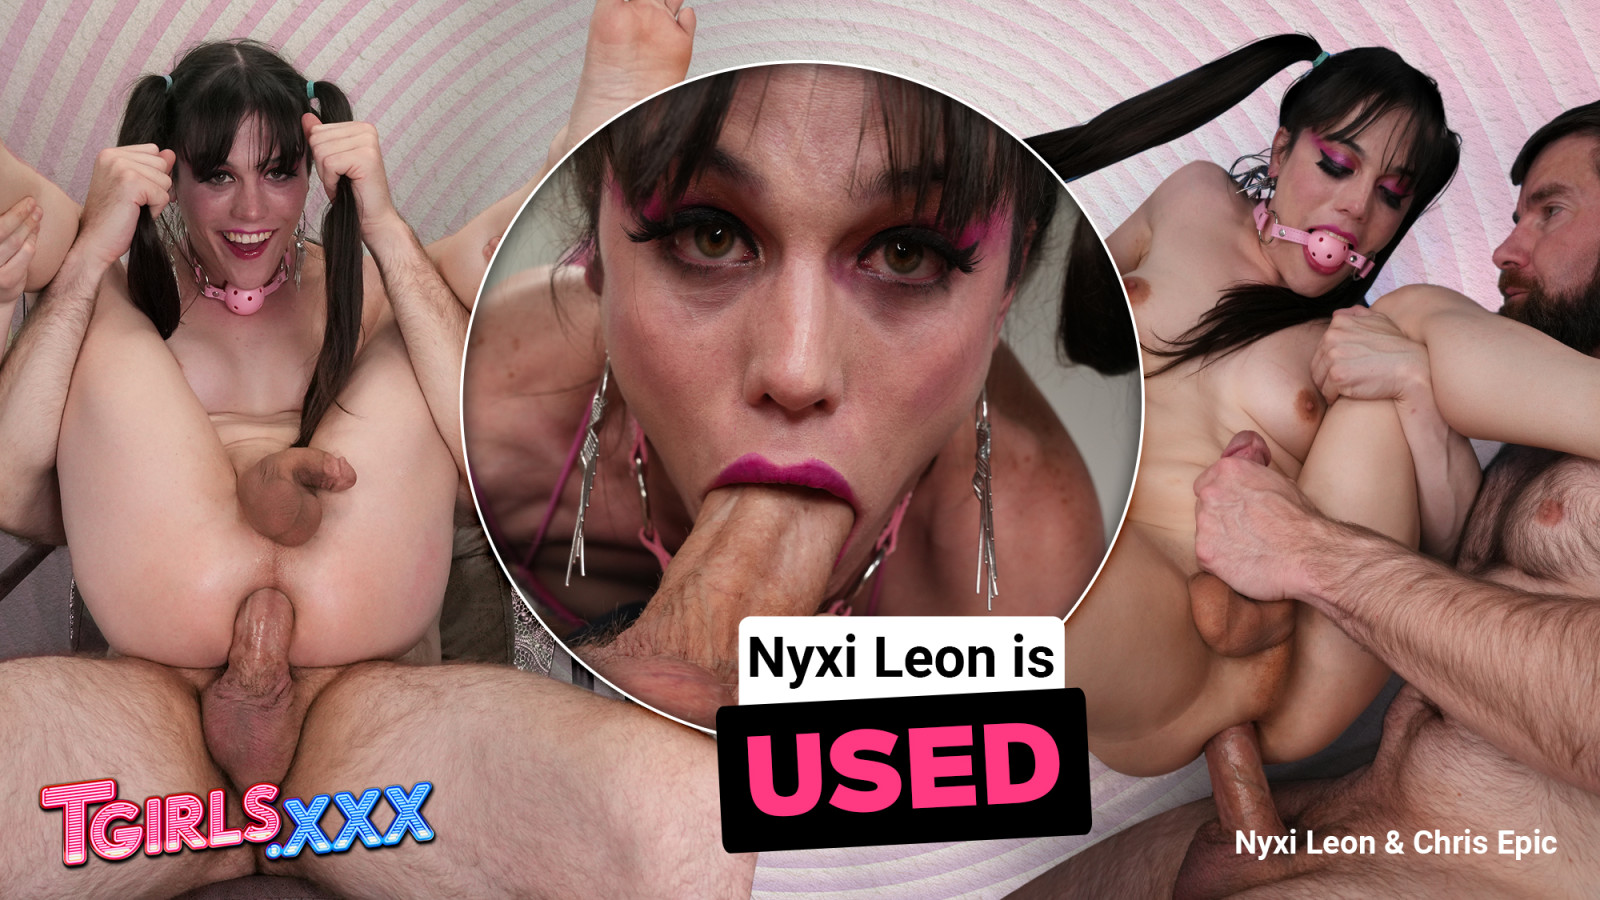 Nyxi Leon is USED